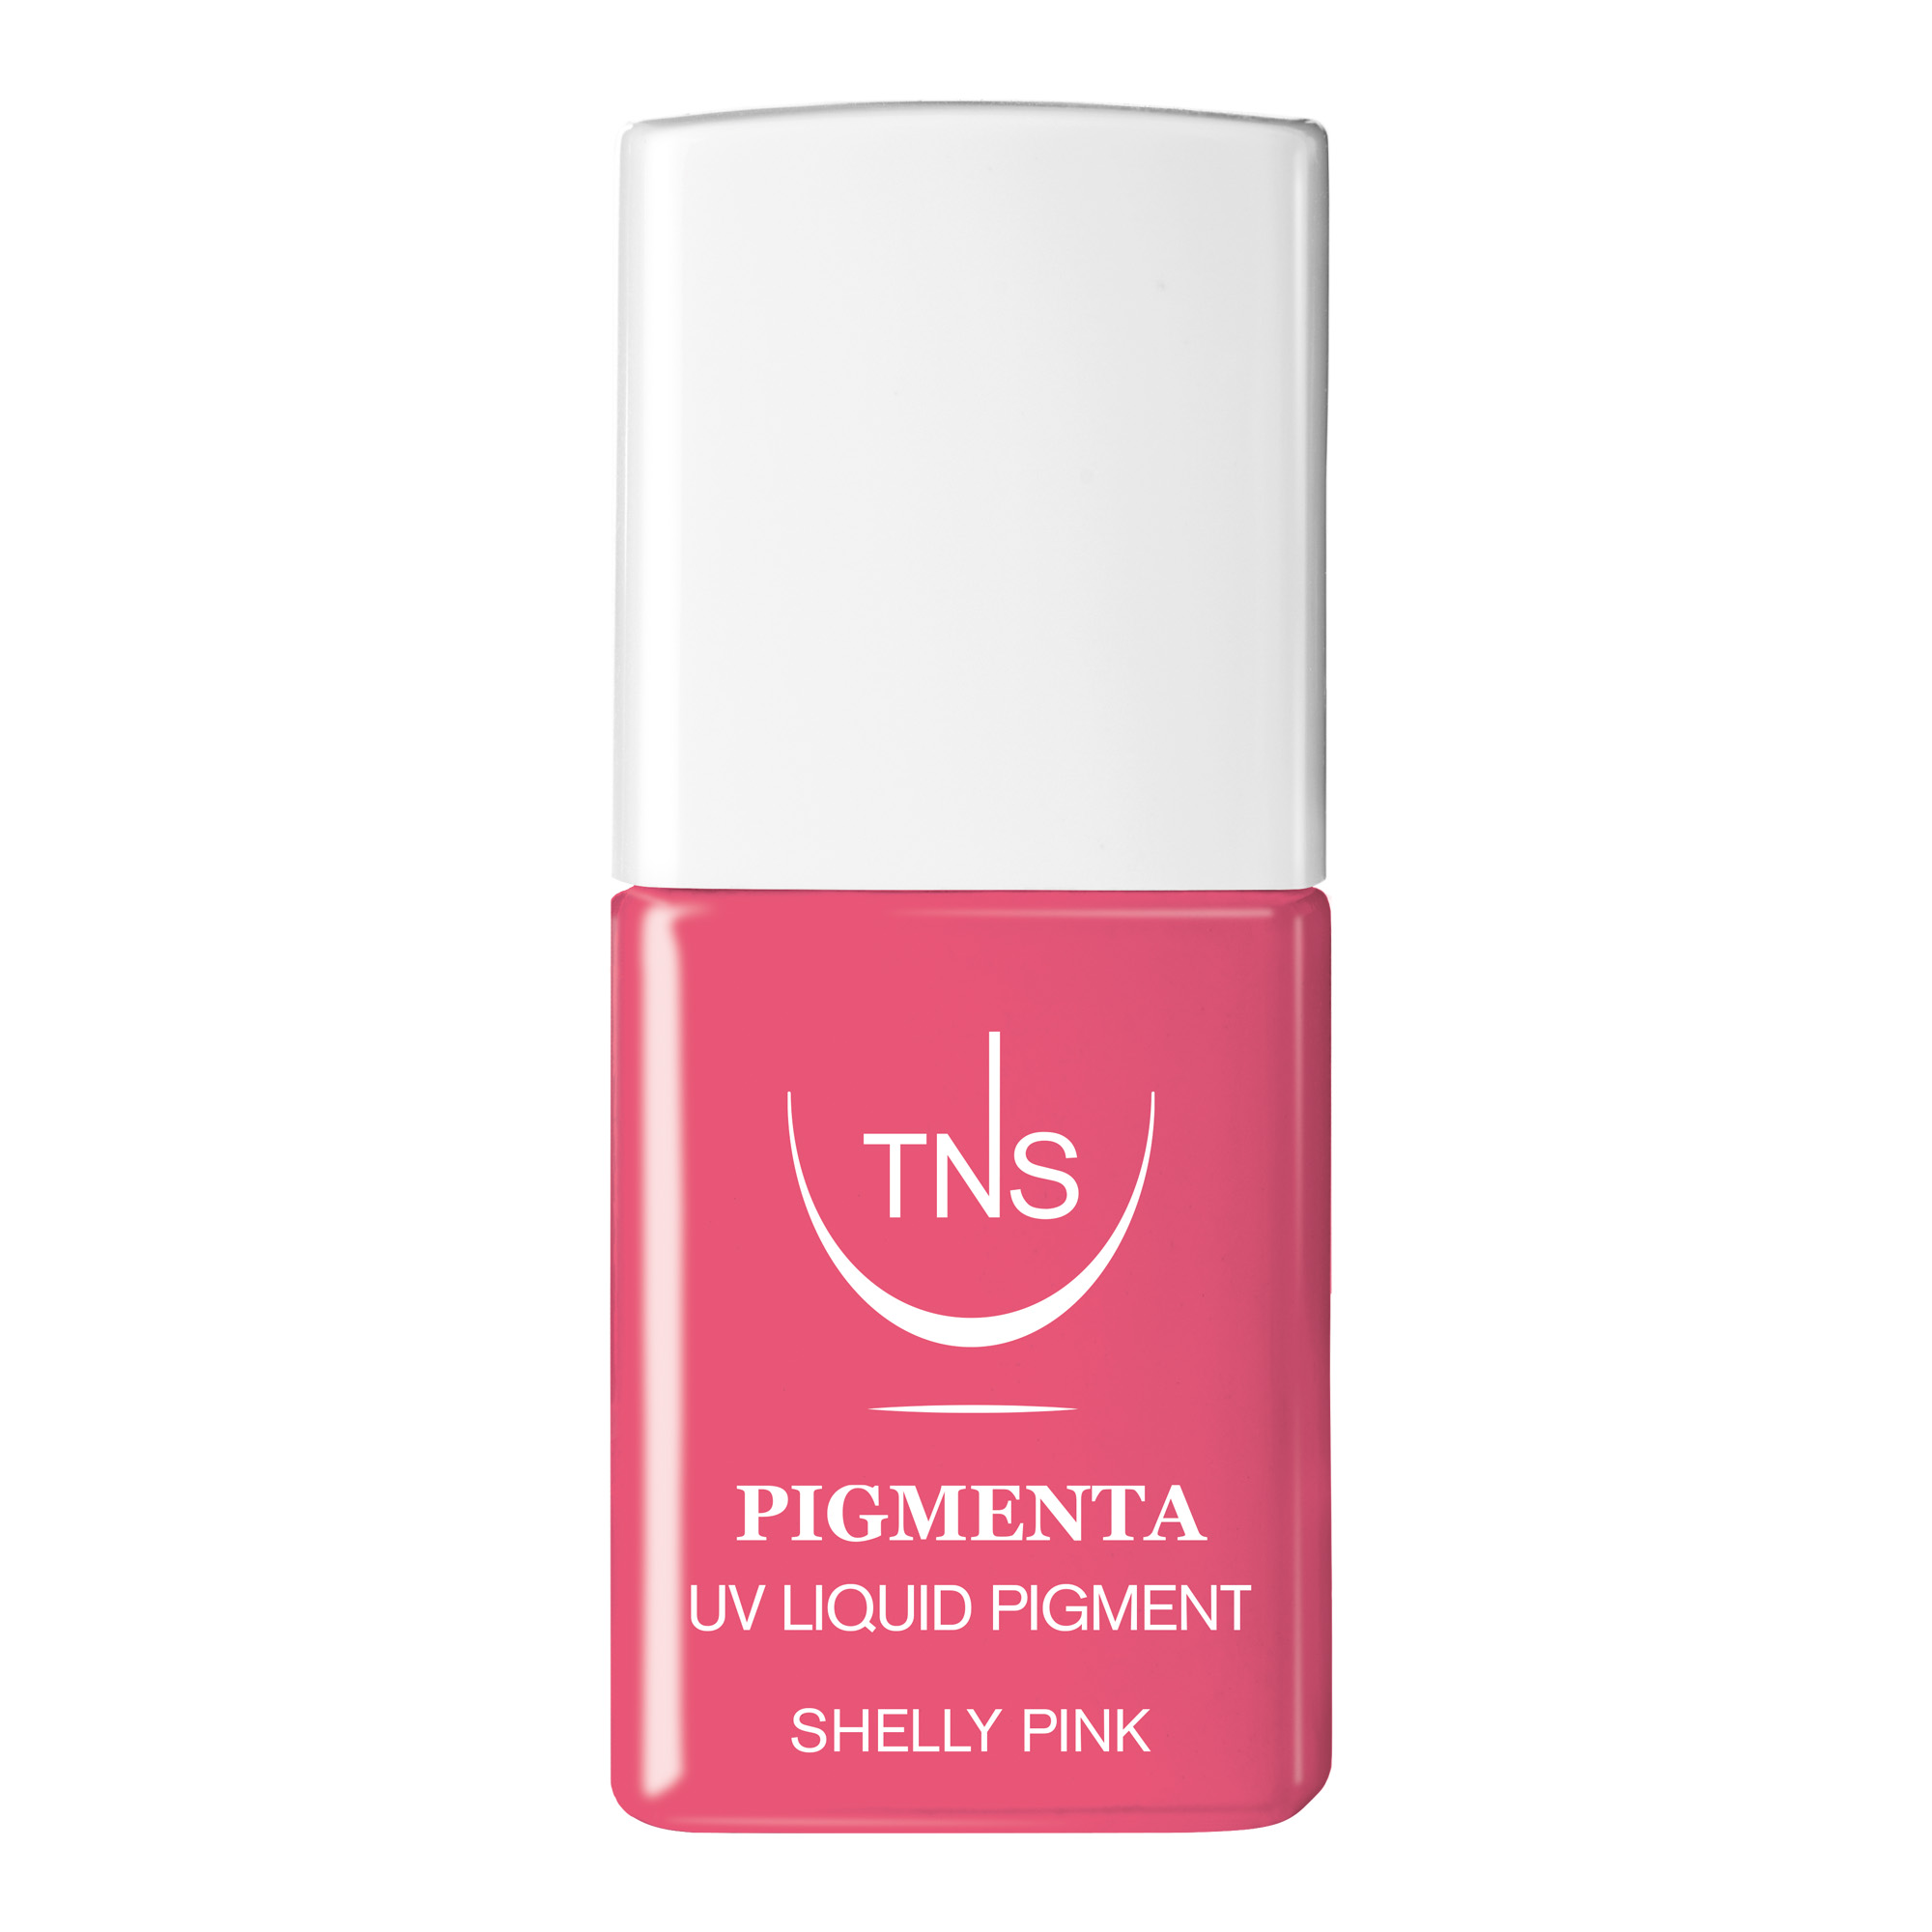 UV Liquid Pigment Shelly Pink bright pink 10 ml Pigmenta TNS